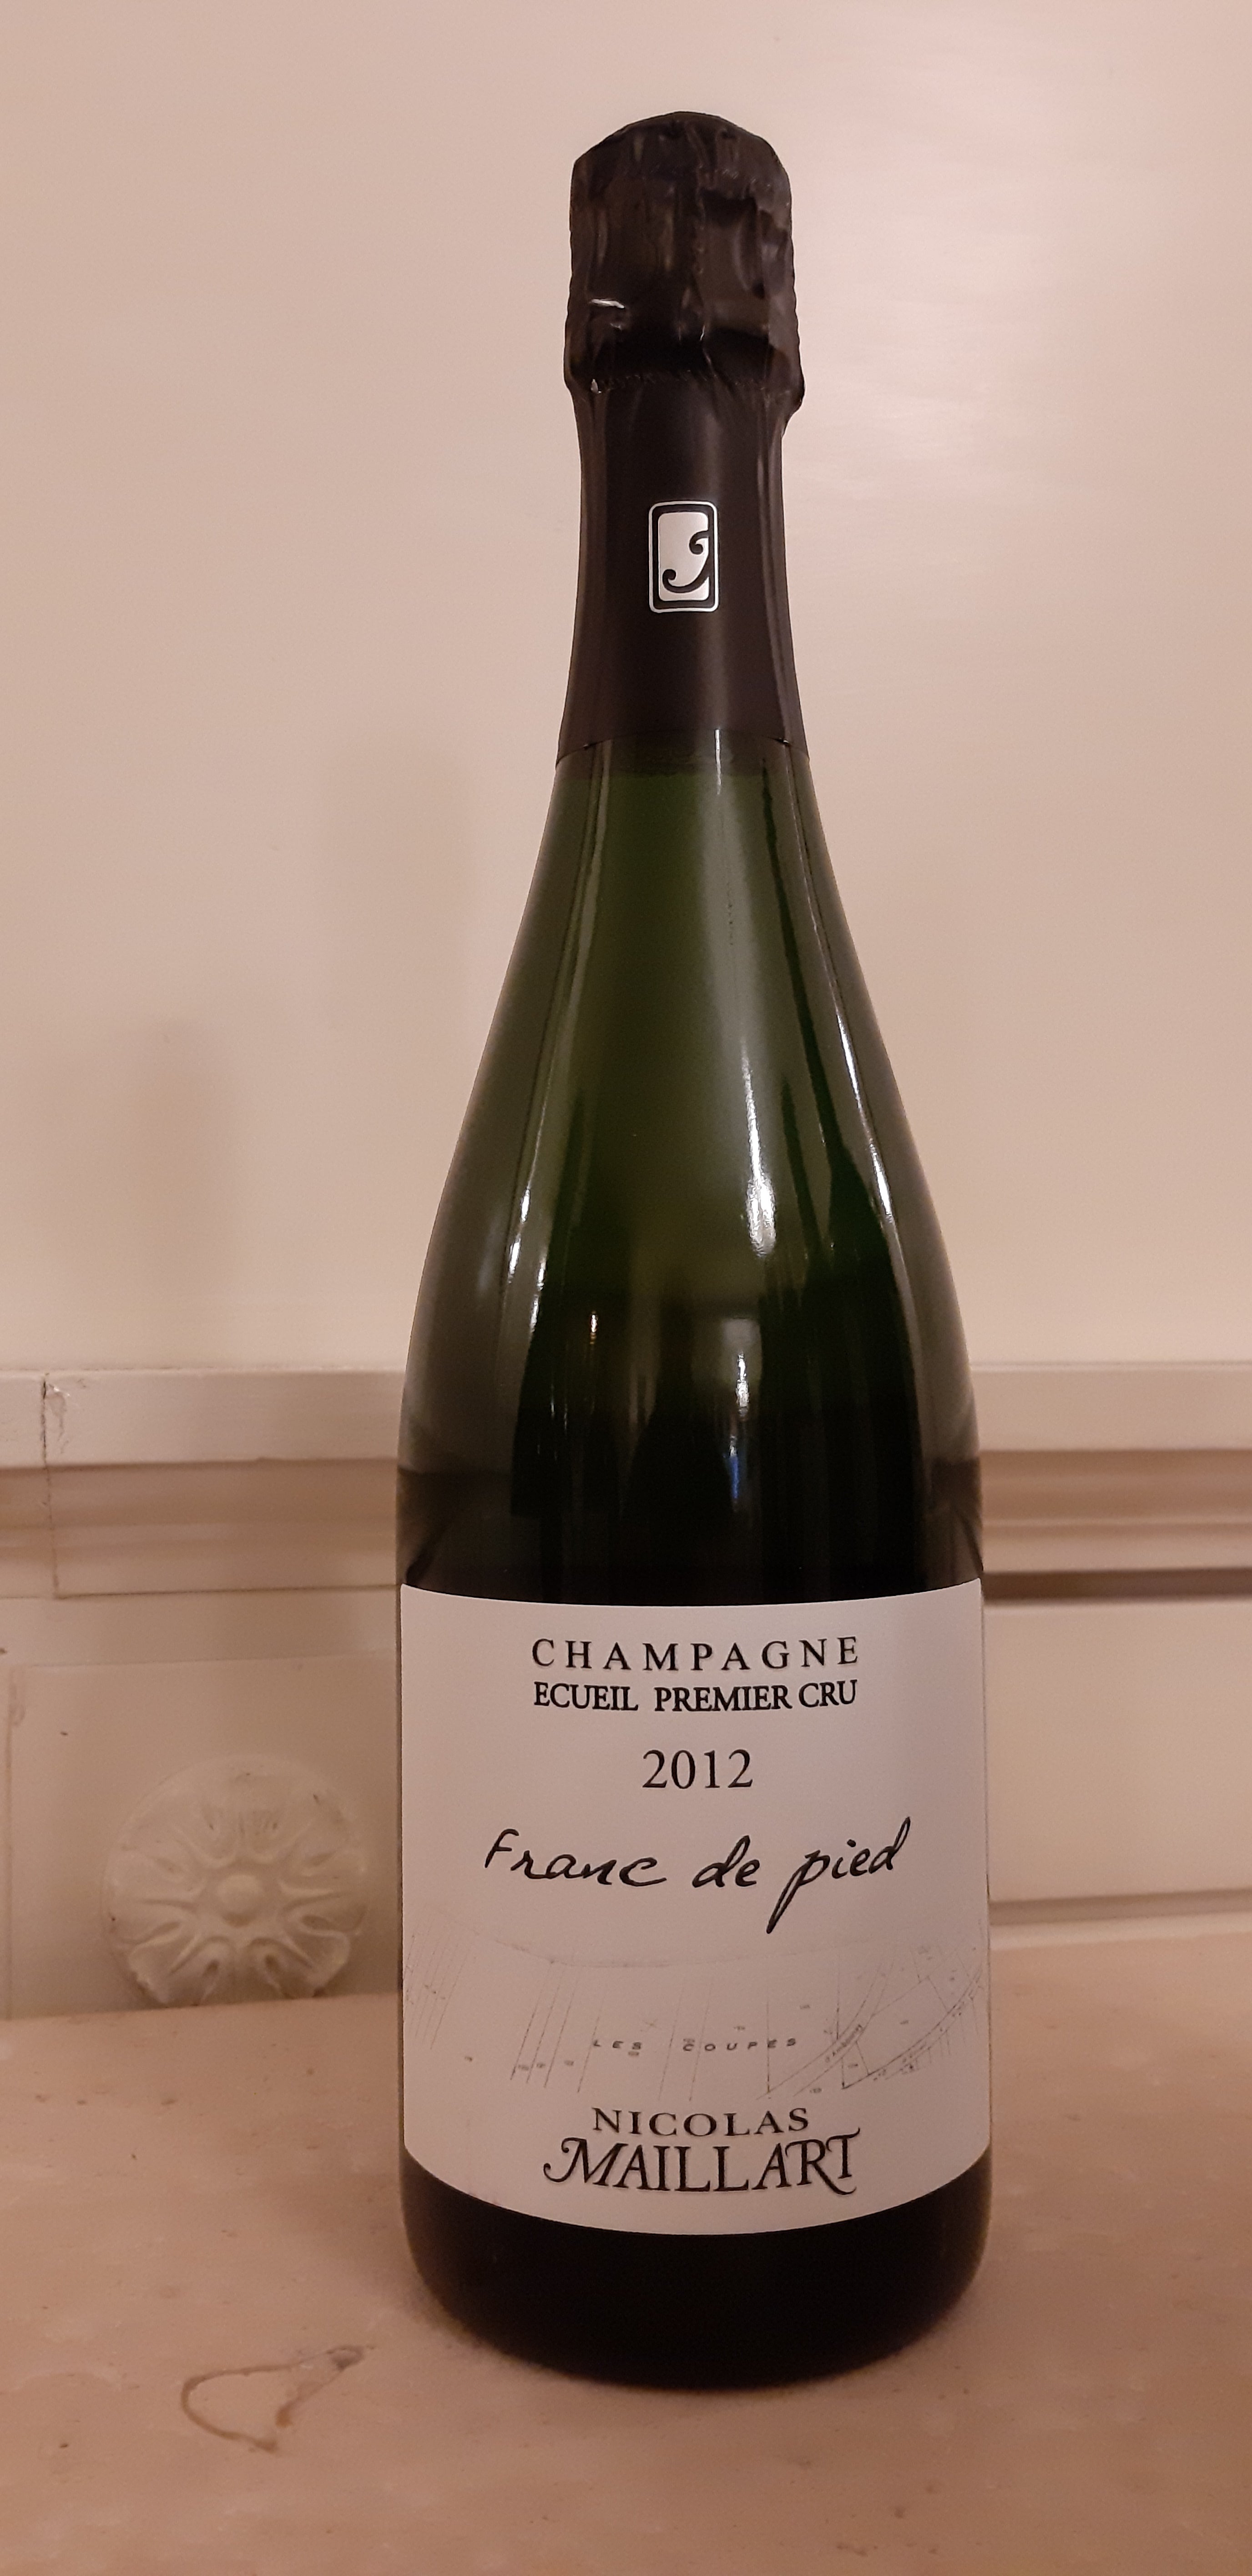 Champagne Extra Brut " Franc de pied " 2012 | Nicolas Maillart